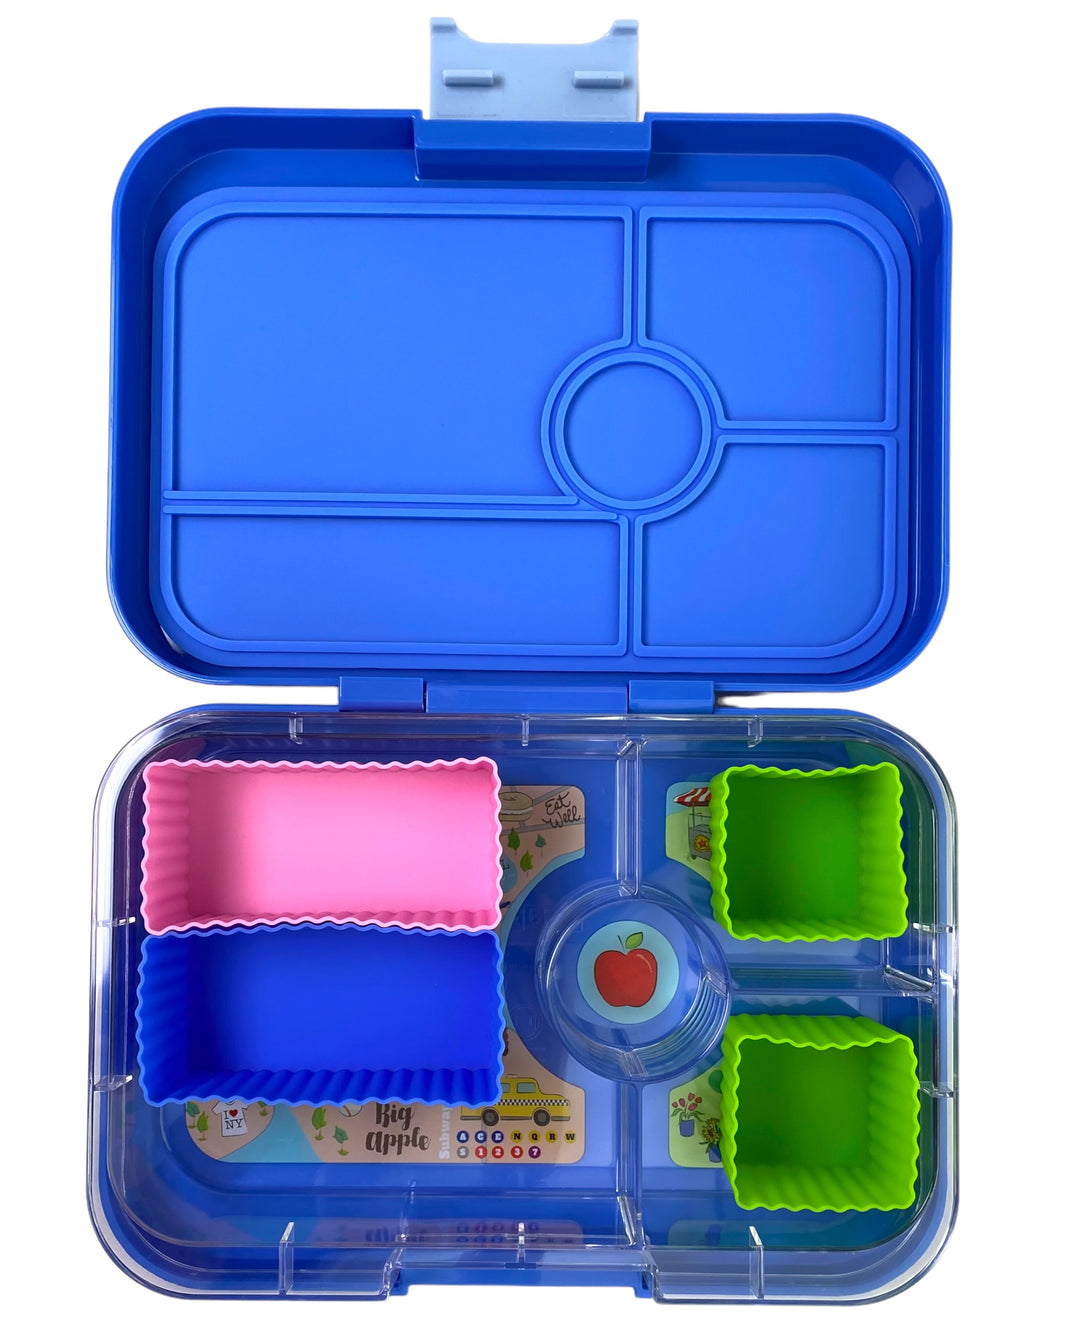 Yumbox Mini Silicone Bento Cubes